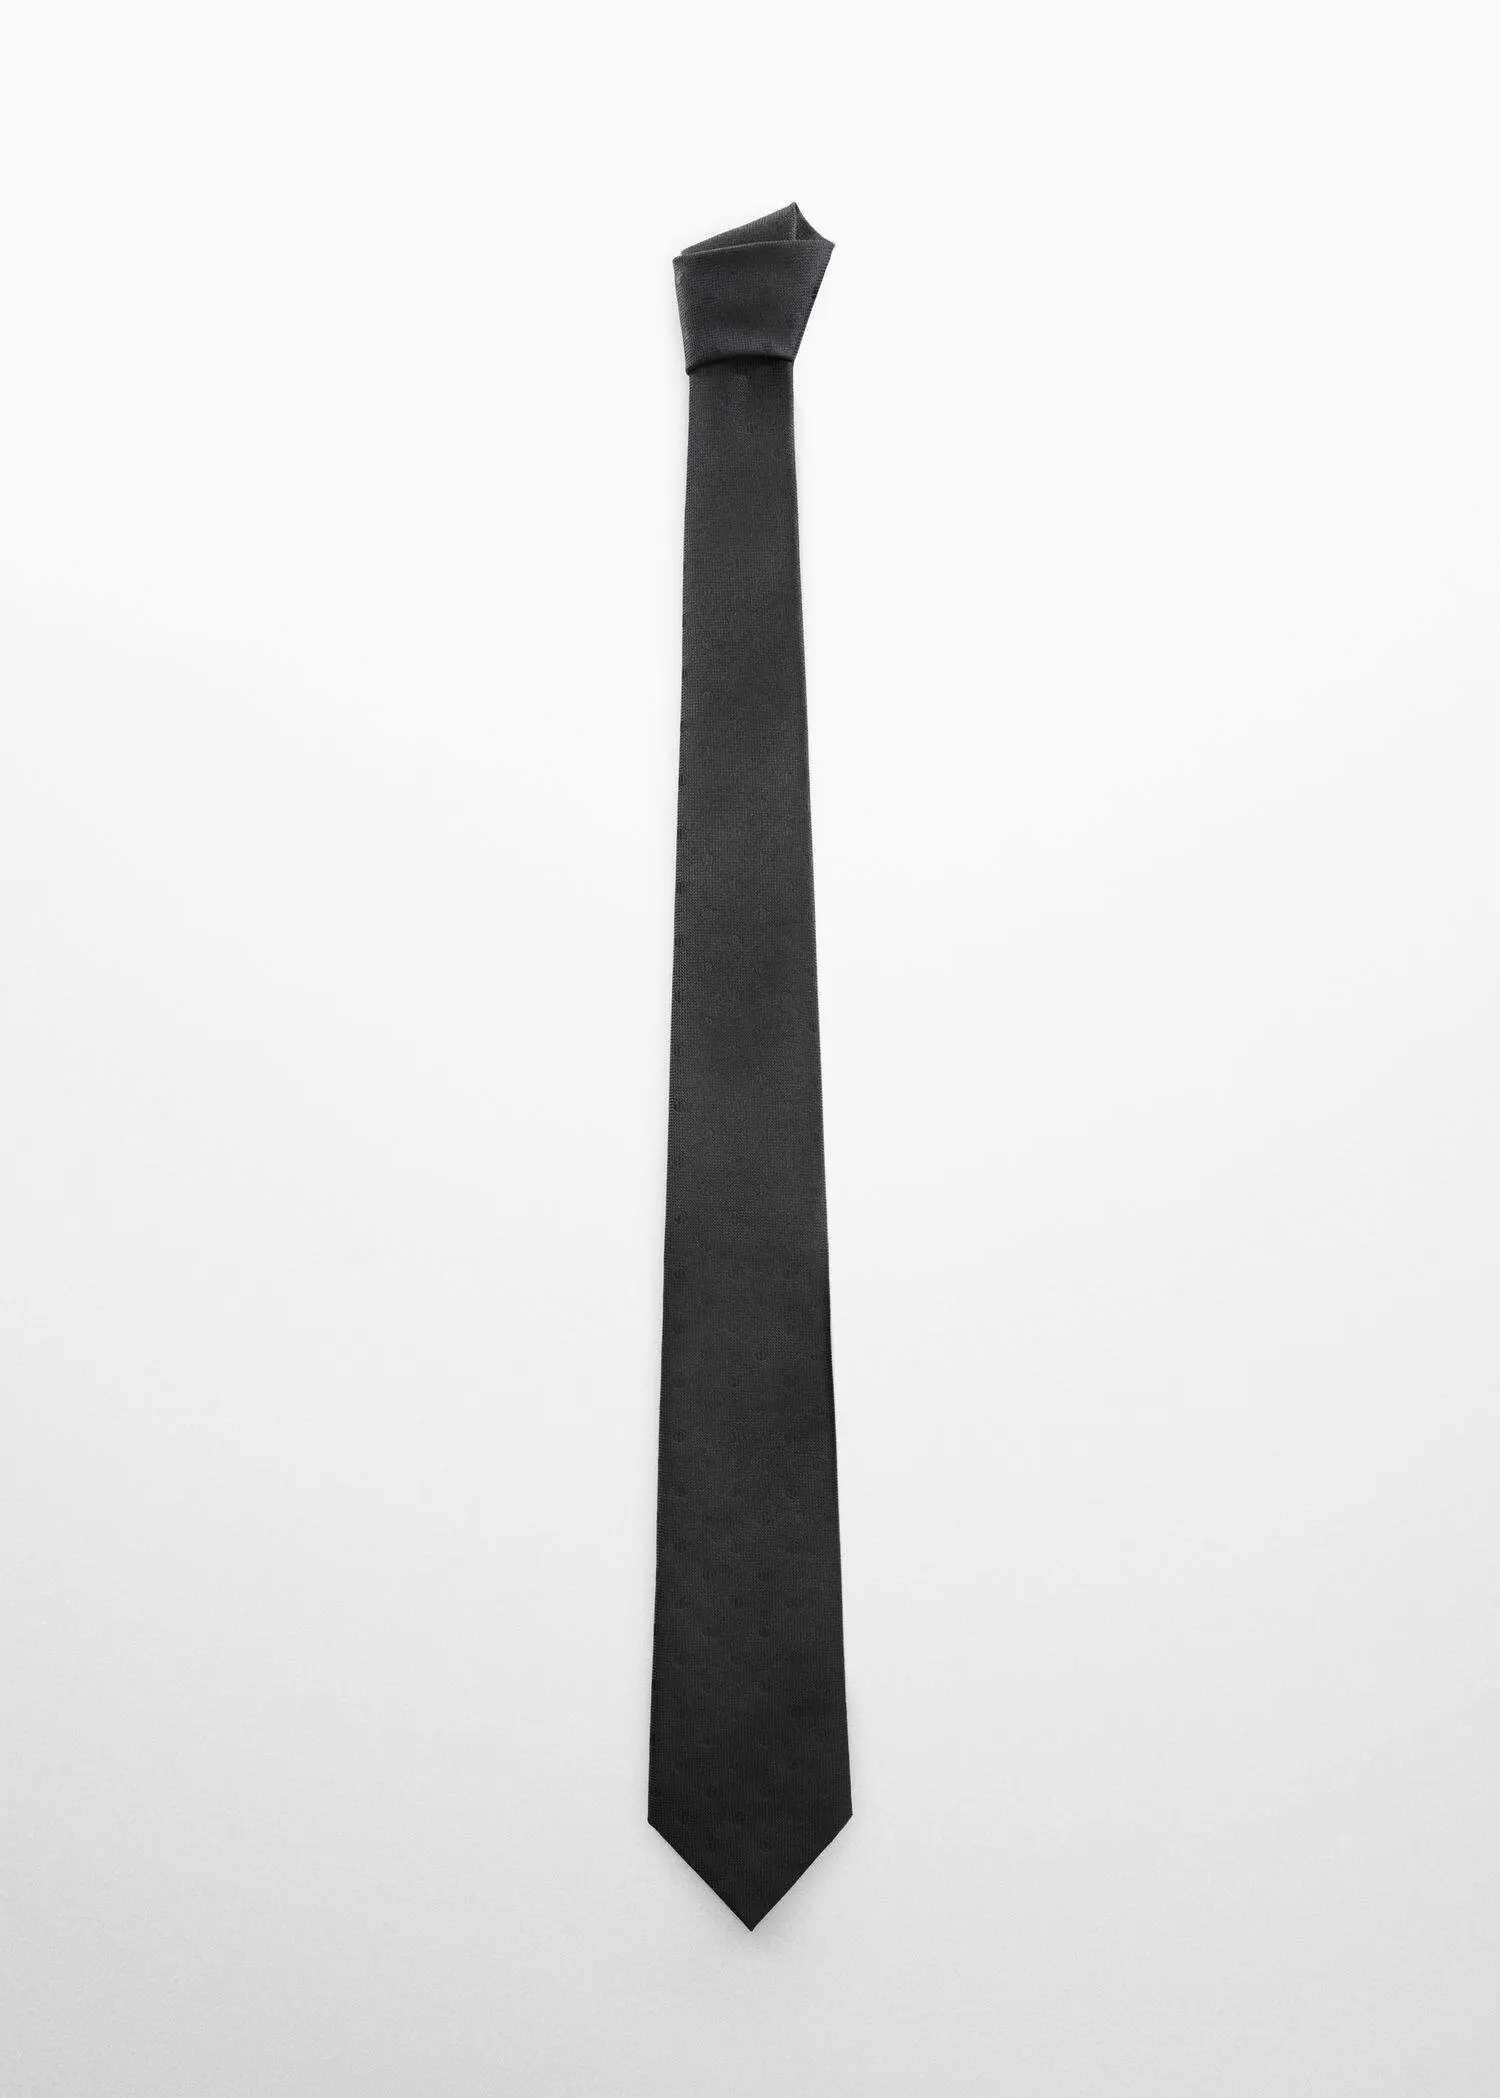 Mango Micro-print tie. a black neck tie on a white background. 